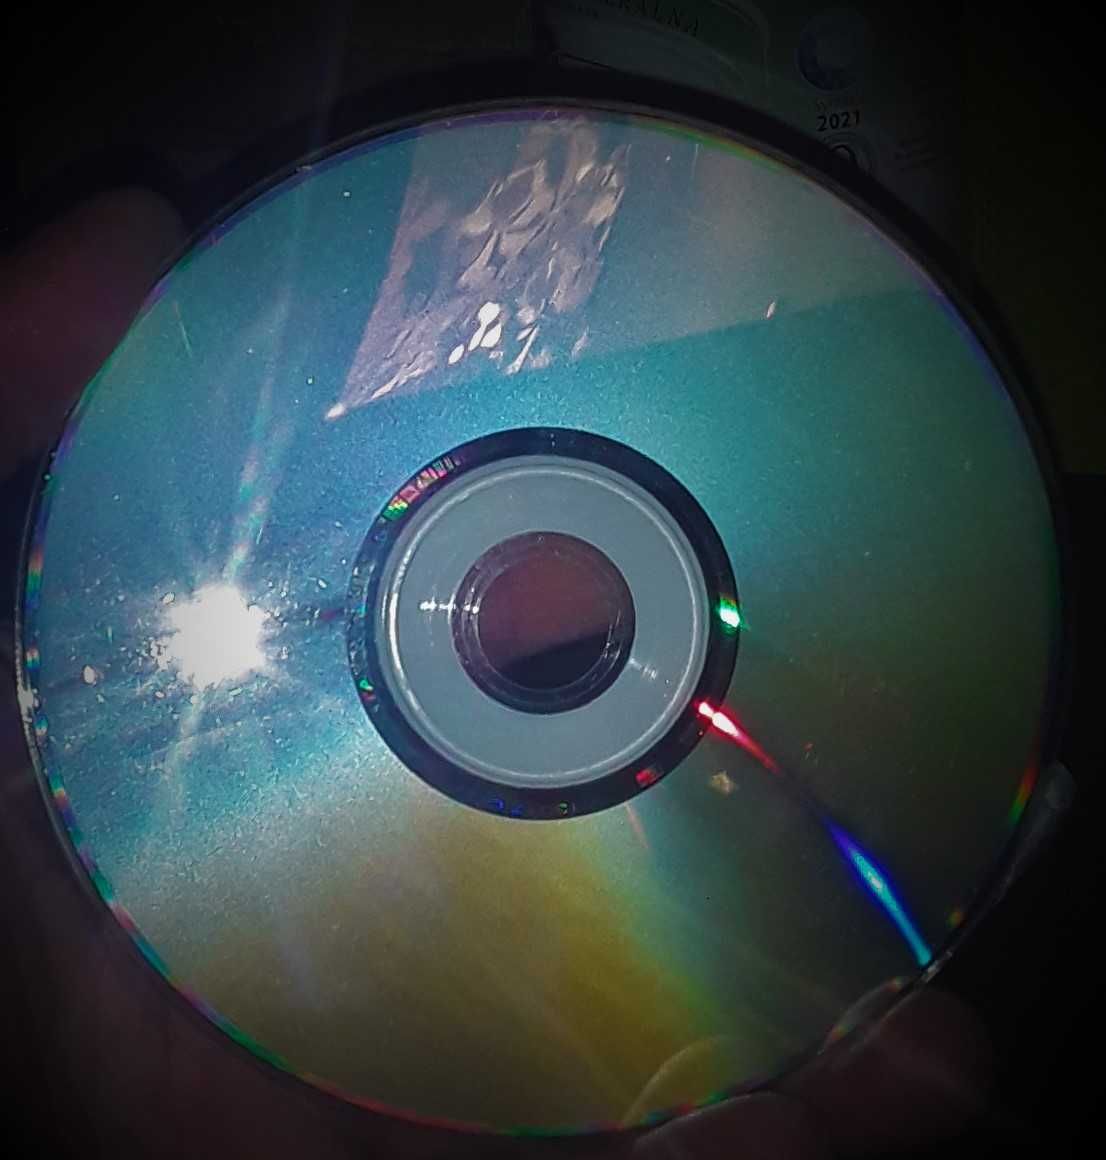 GTA - Grand Theft Auto / PC CD-ROM